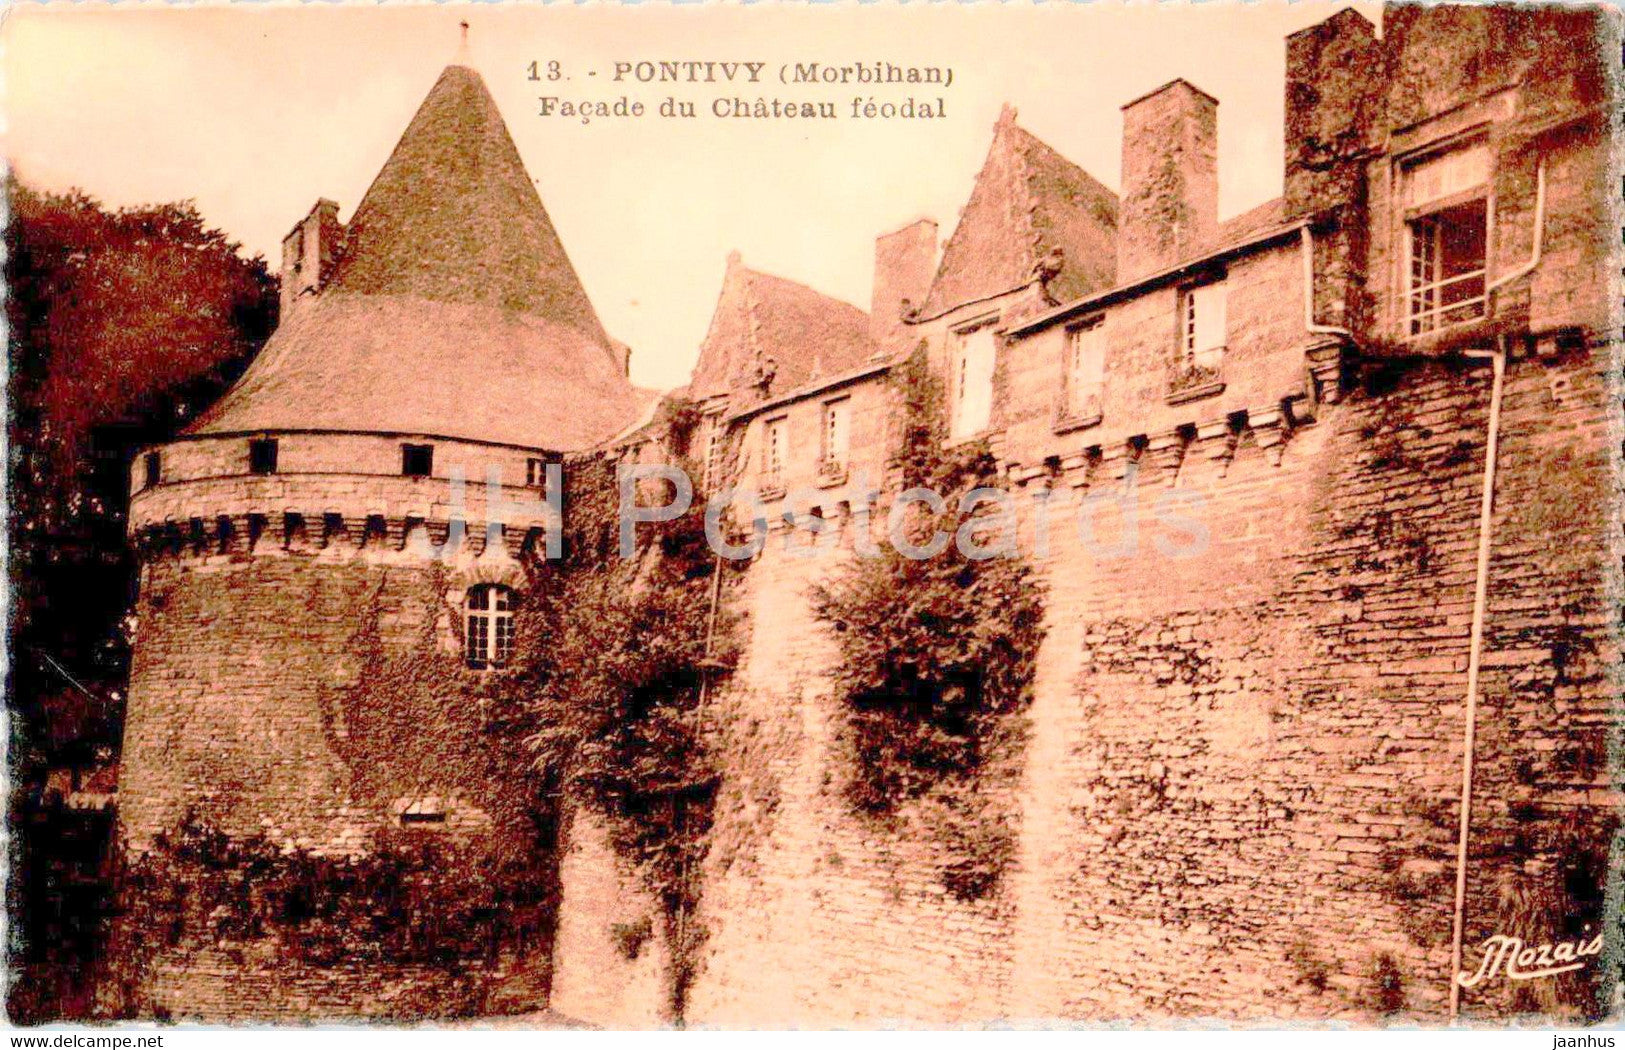 Pontivy - Morbihan - Facade du Chateau feodal - castle - 13 - old postcard - France - unused - JH Postcards